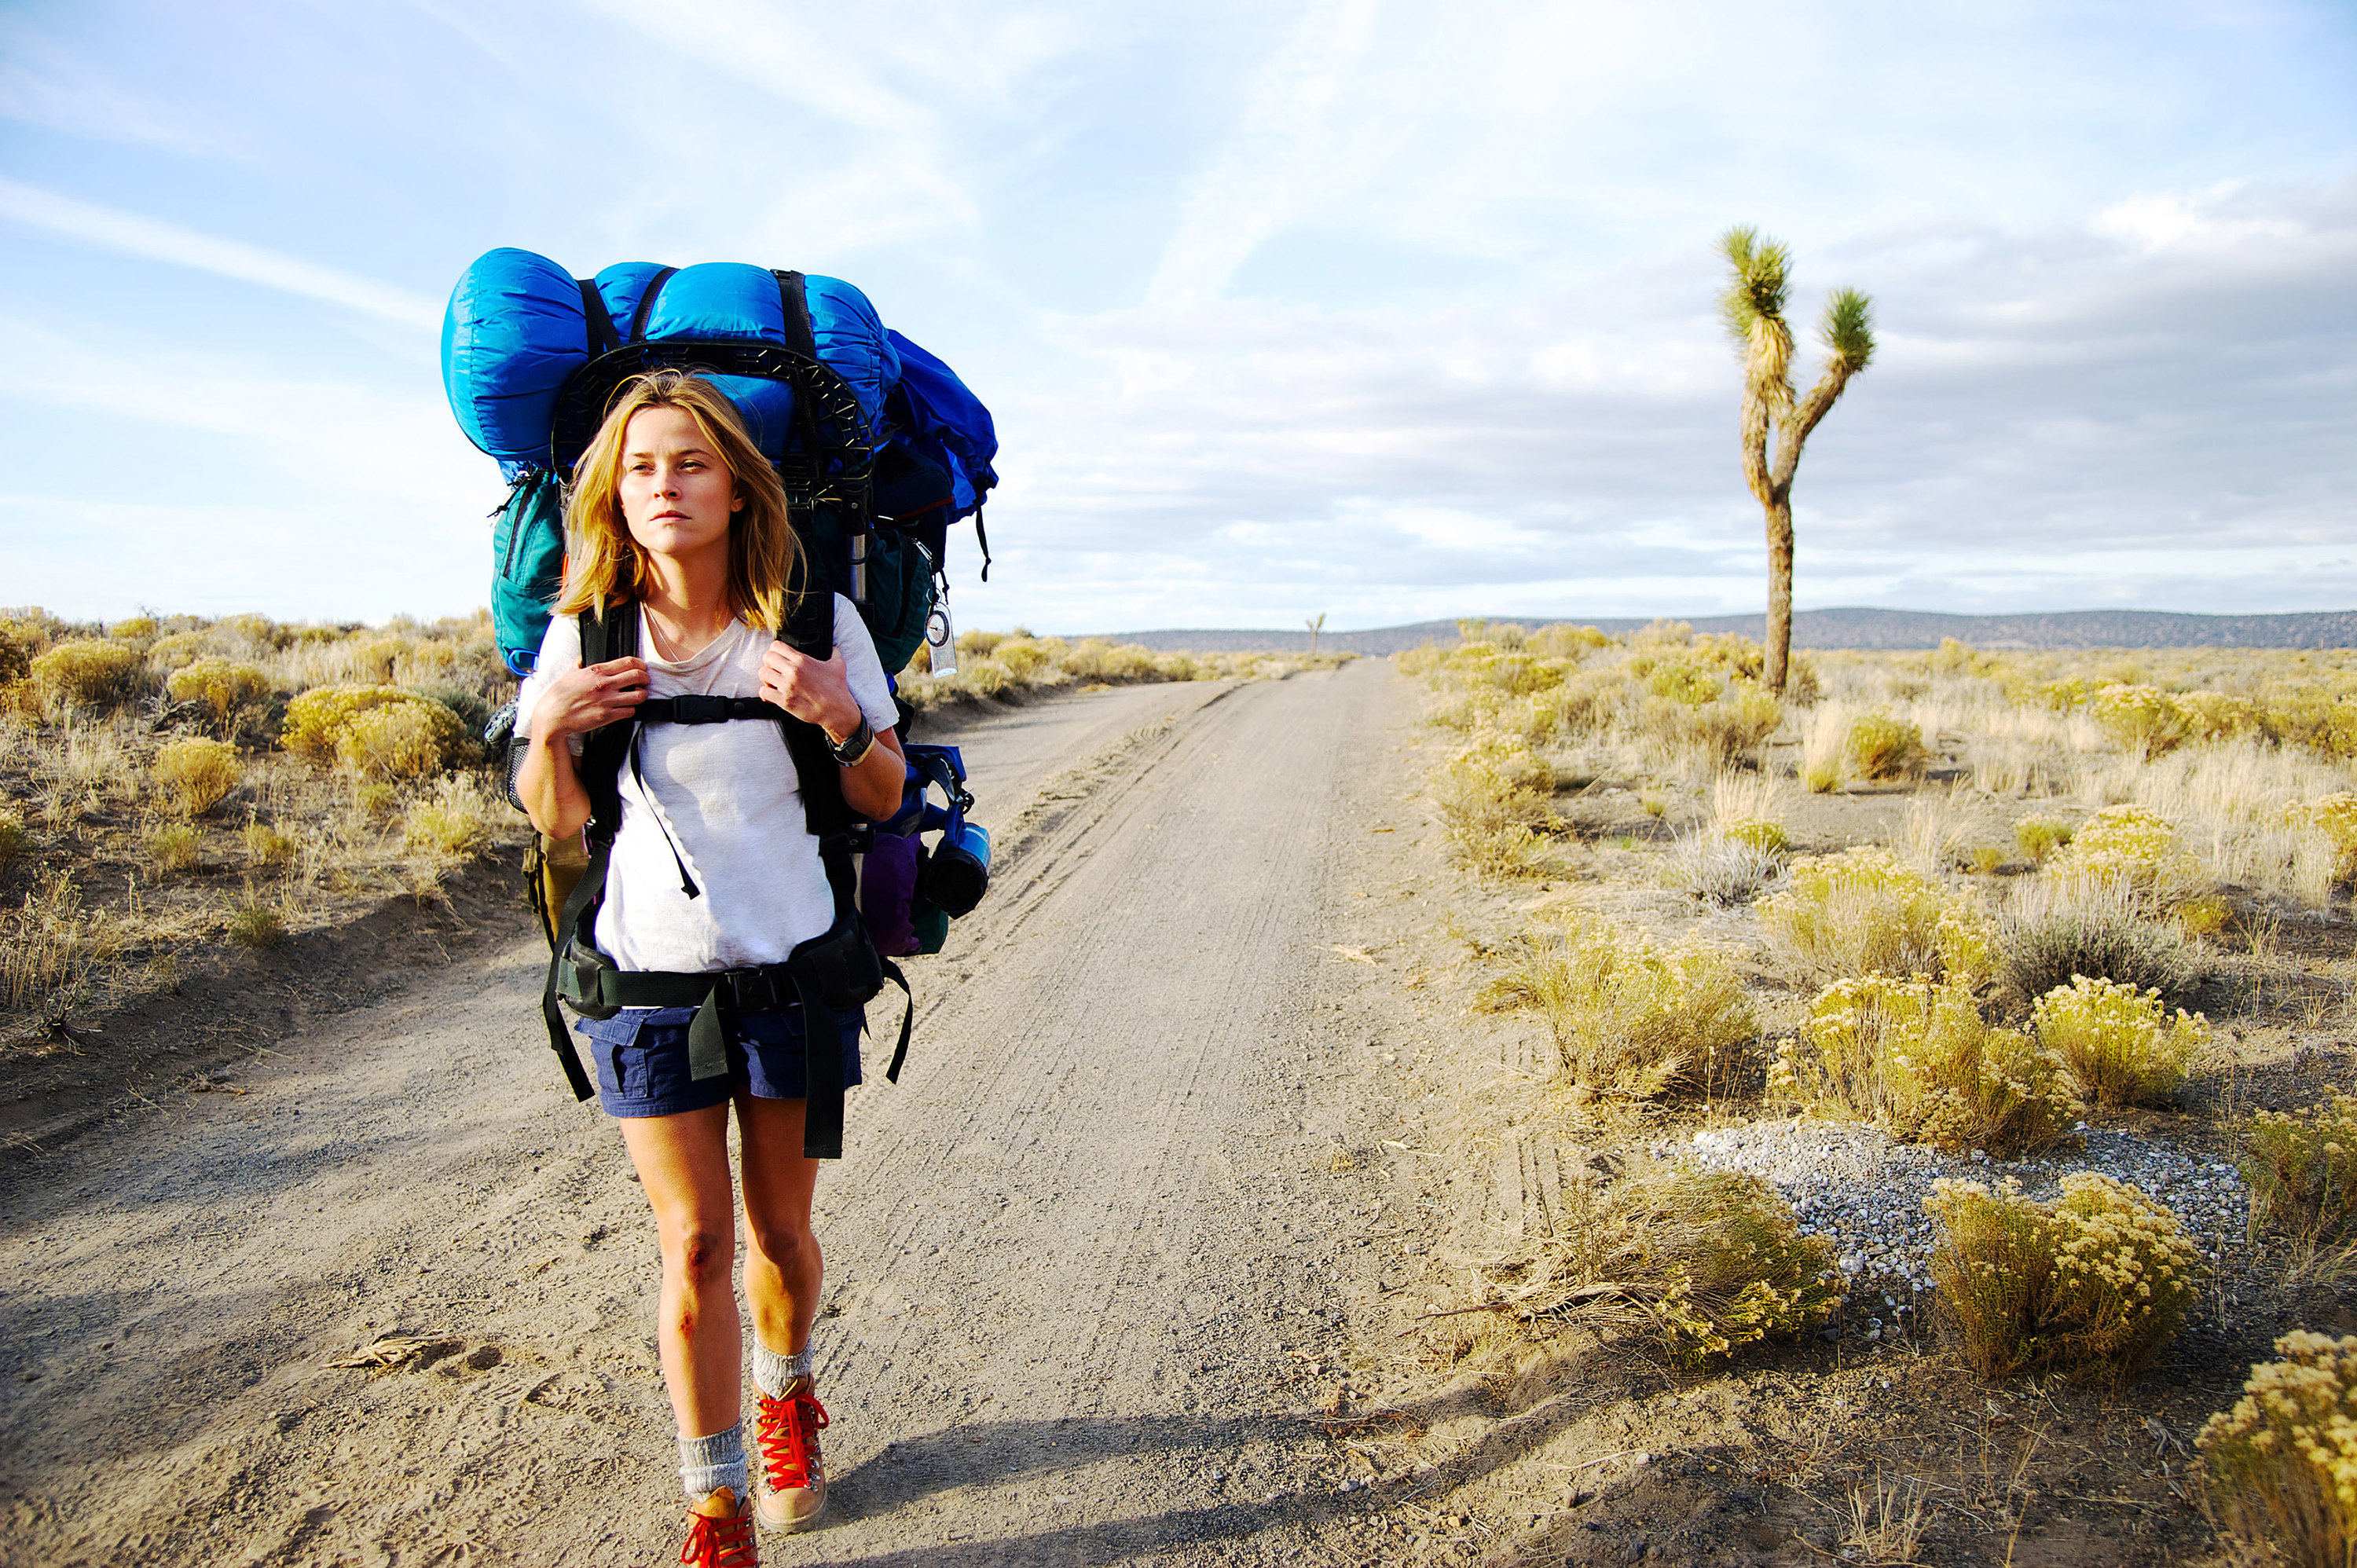 8 Safety Tips for Solo Female Travel - NerdWallet